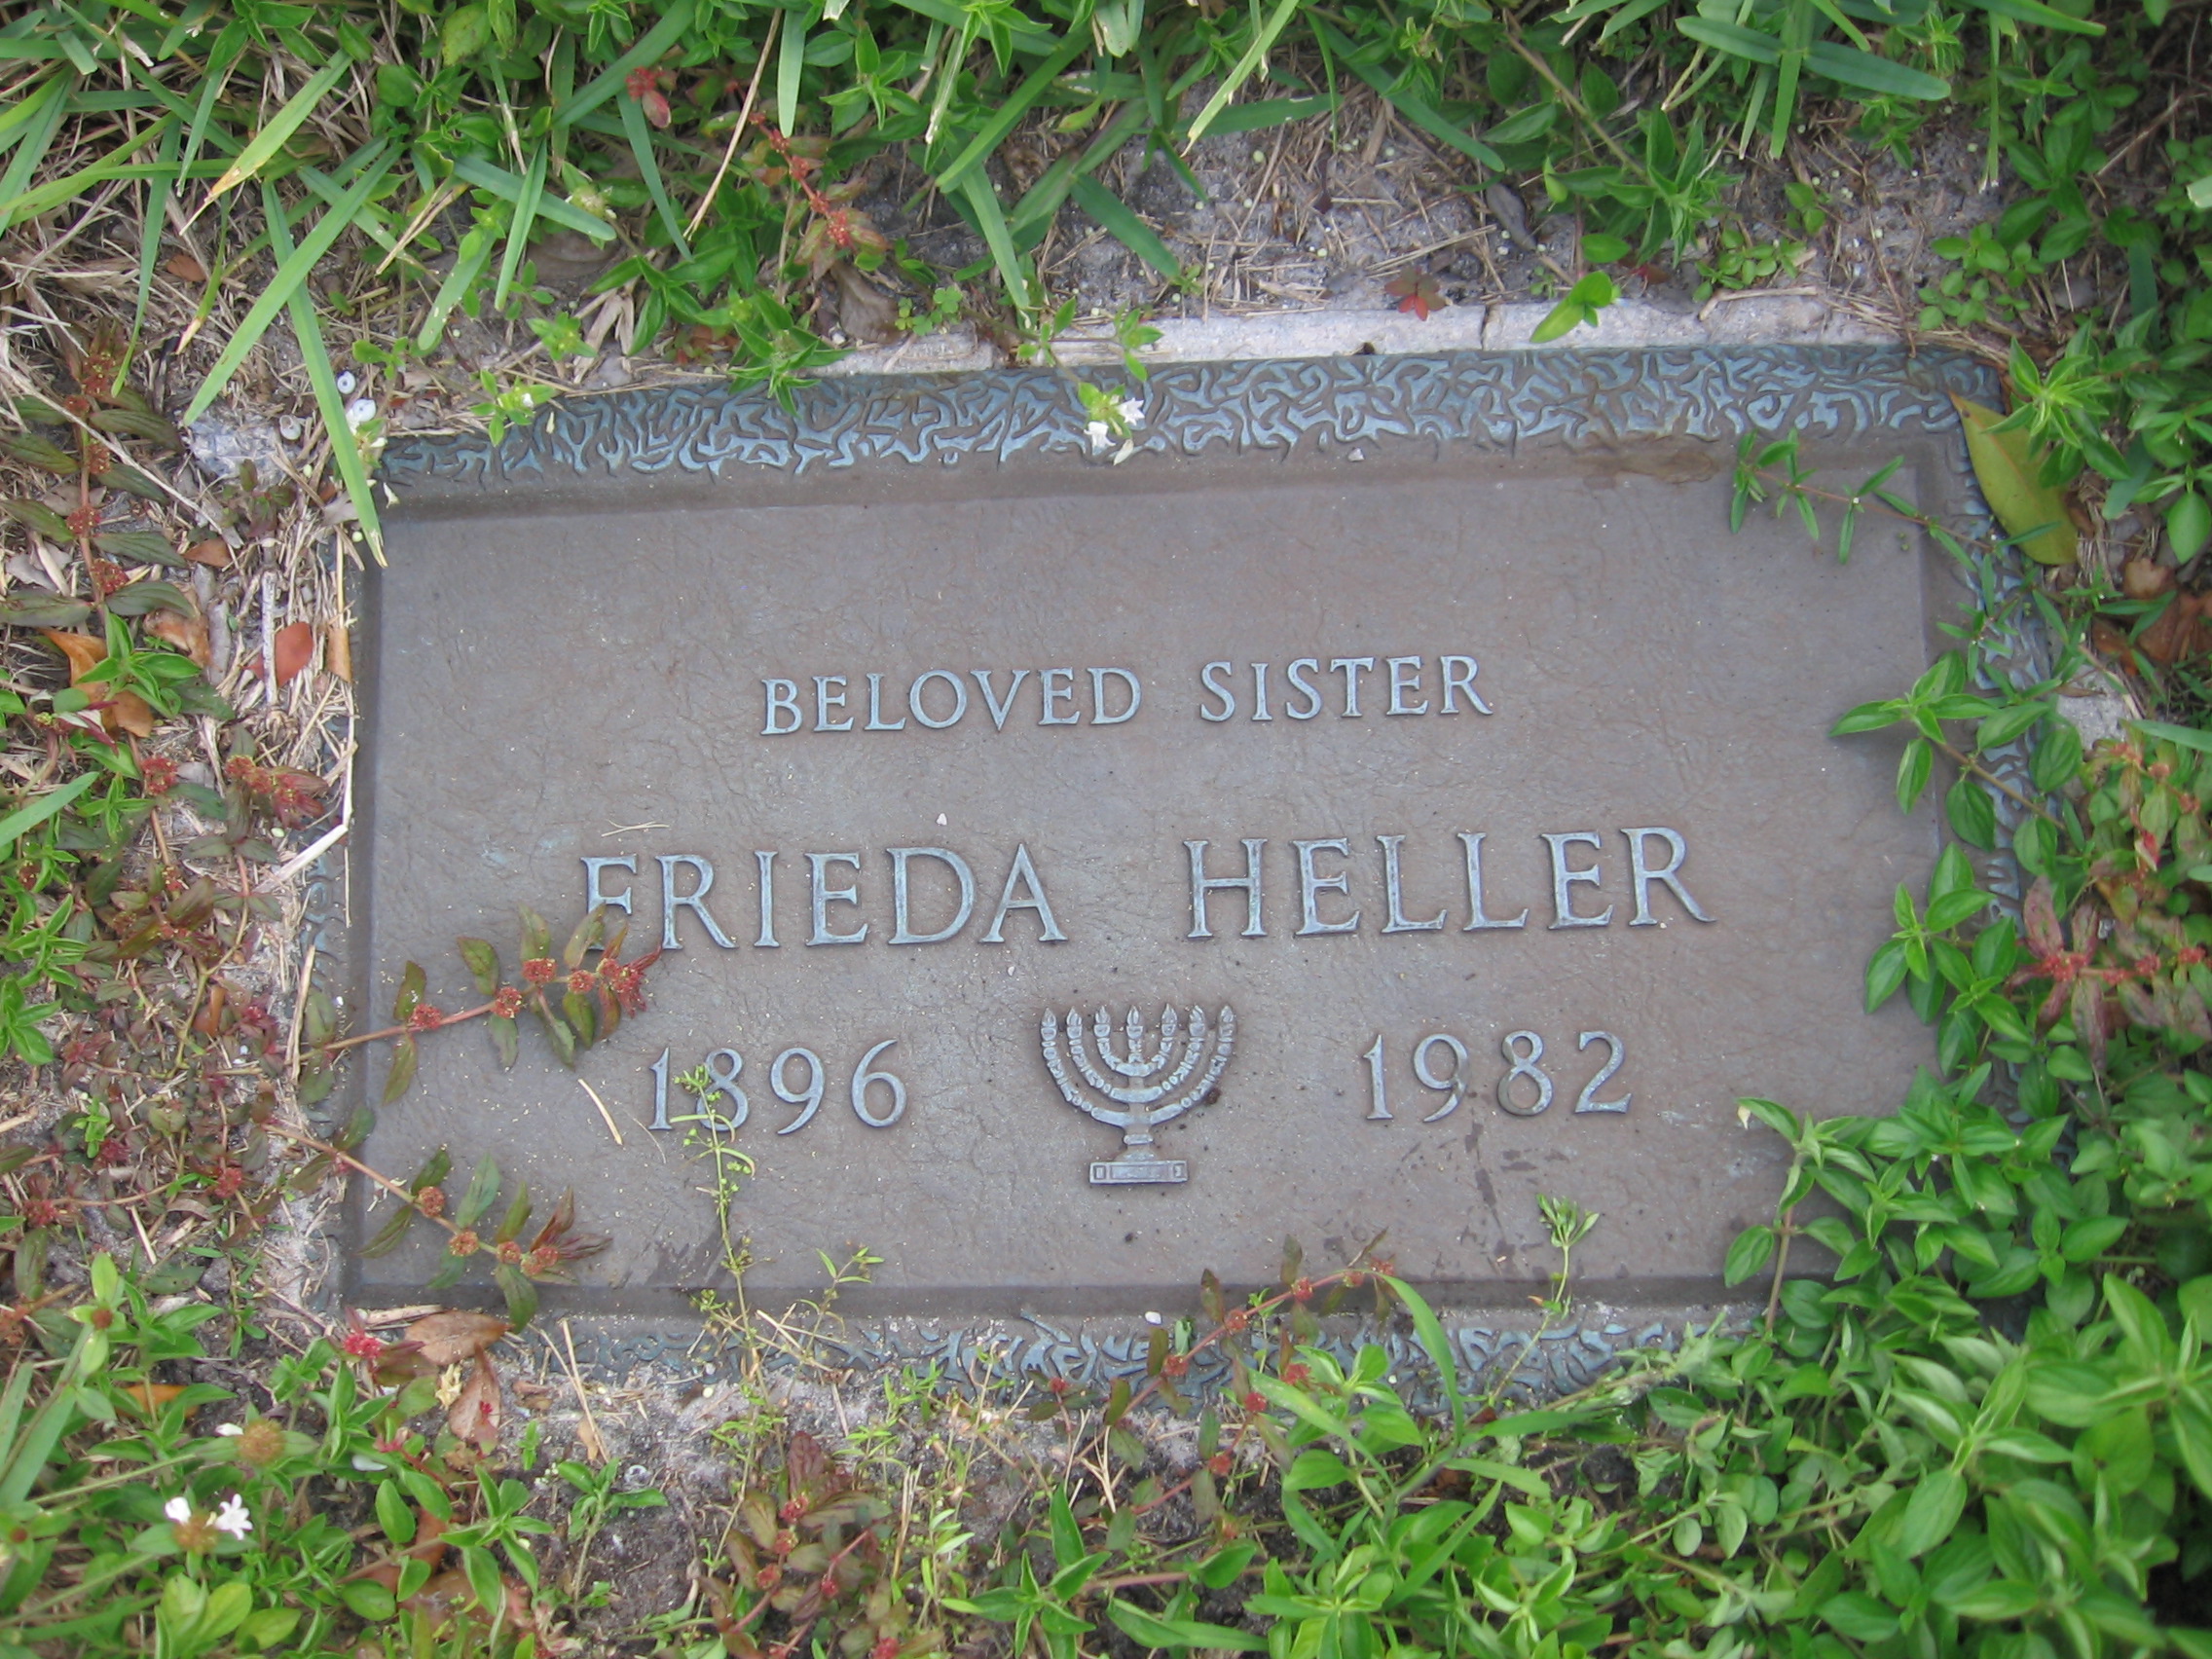 Frieda Heller